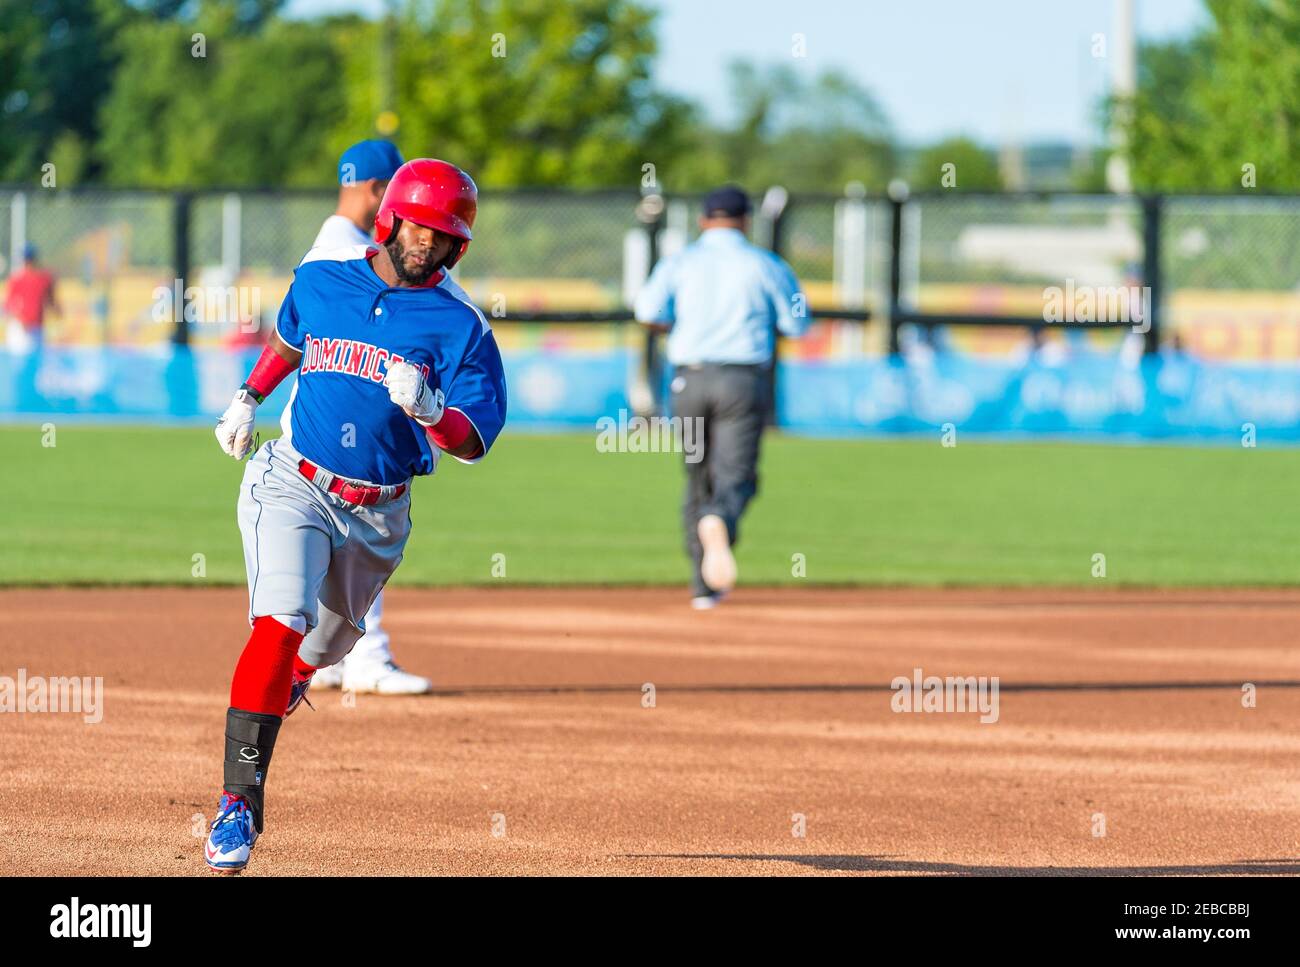 Toronto Panam Baseball 2015-Cuba vs the Dominican Republic: Ruben Sosa bats home run in the first at-bat, first inning of Cuba vs the Dominican Republic. P Stock Photo